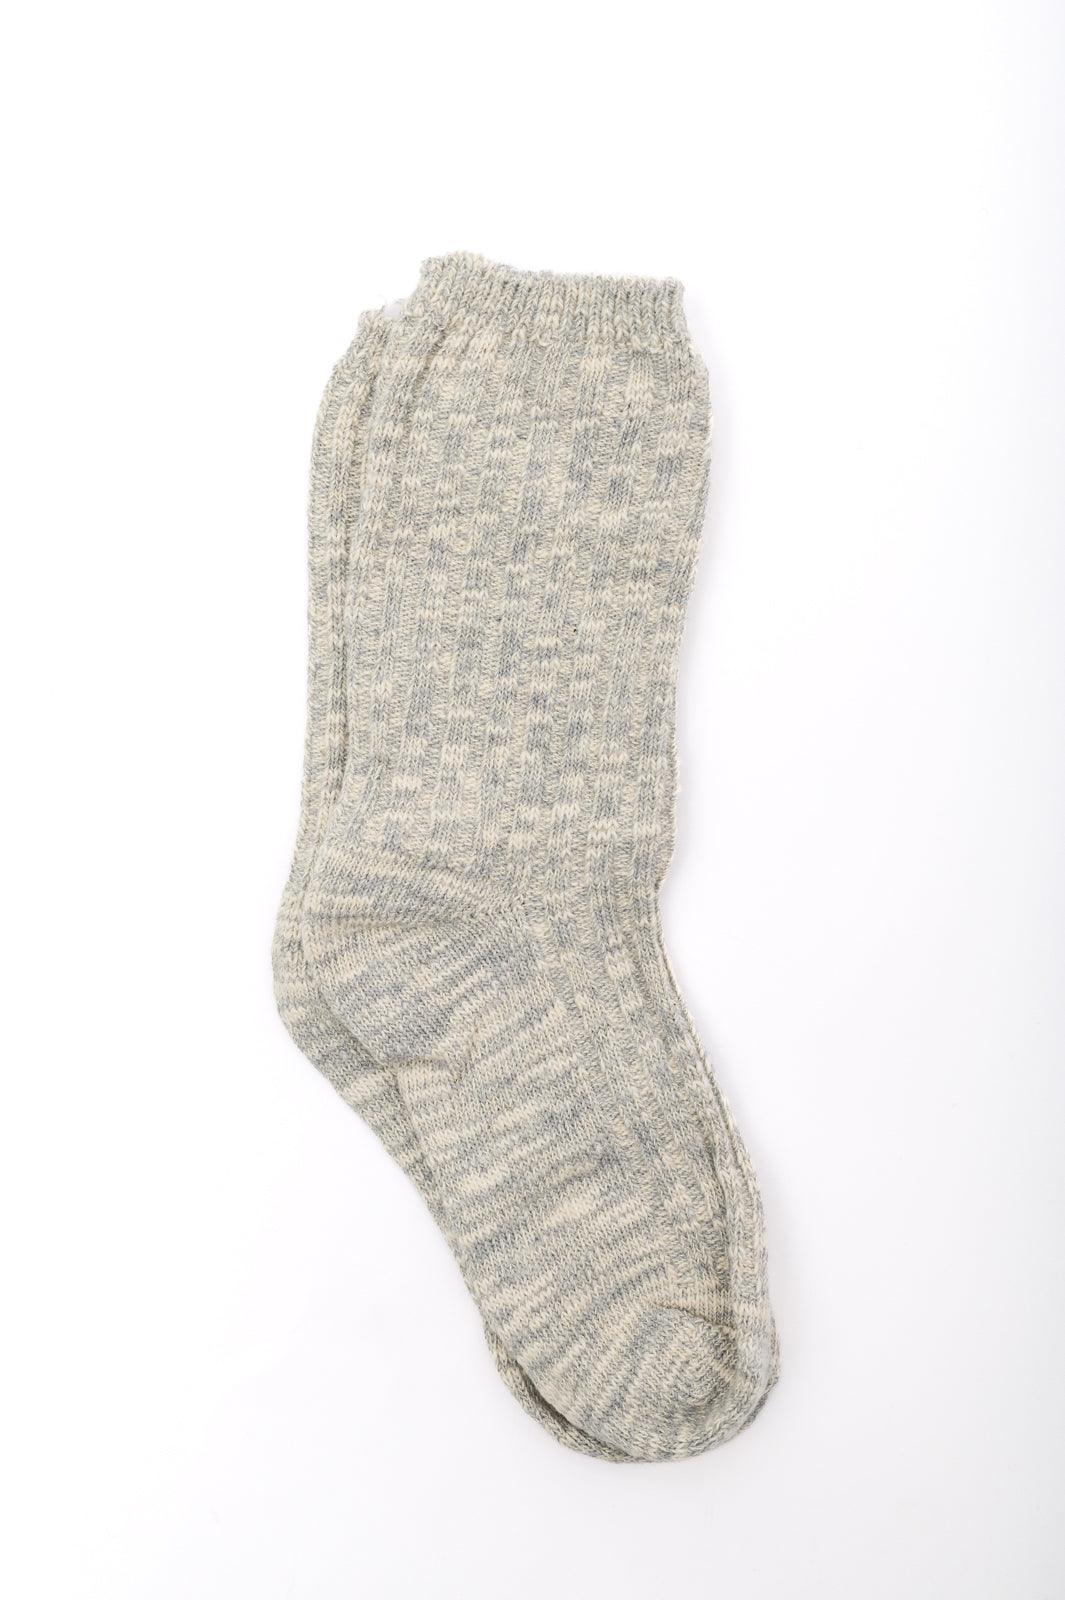 Sweet Socks Heathered Scrunch Socks - PEONIES & LIME